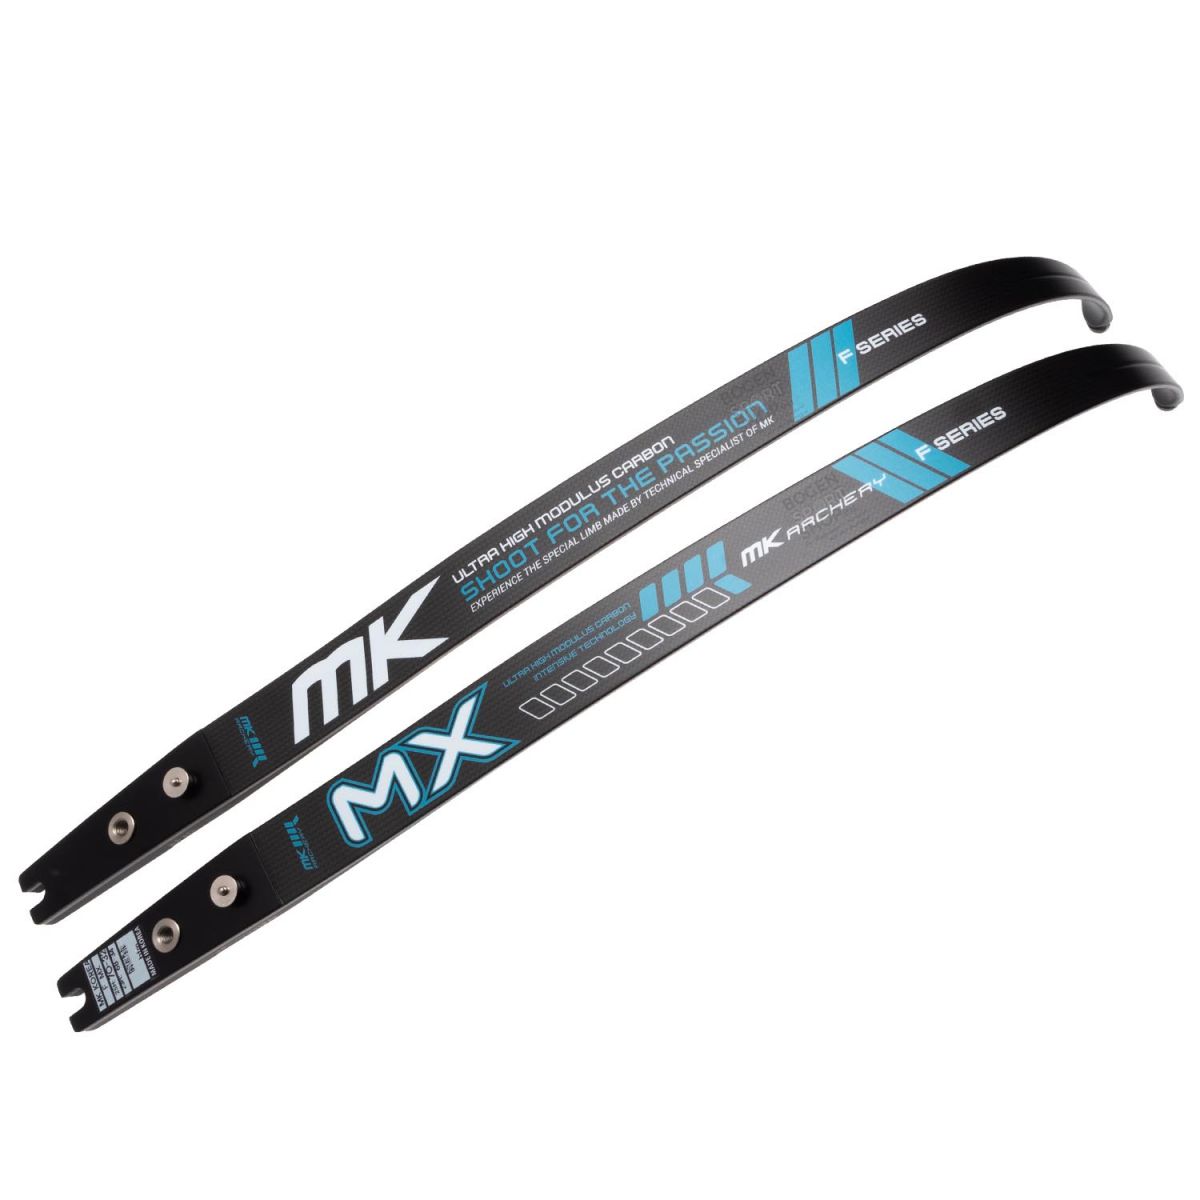 MK Korea Limbs Formula MX Carbon/Foam